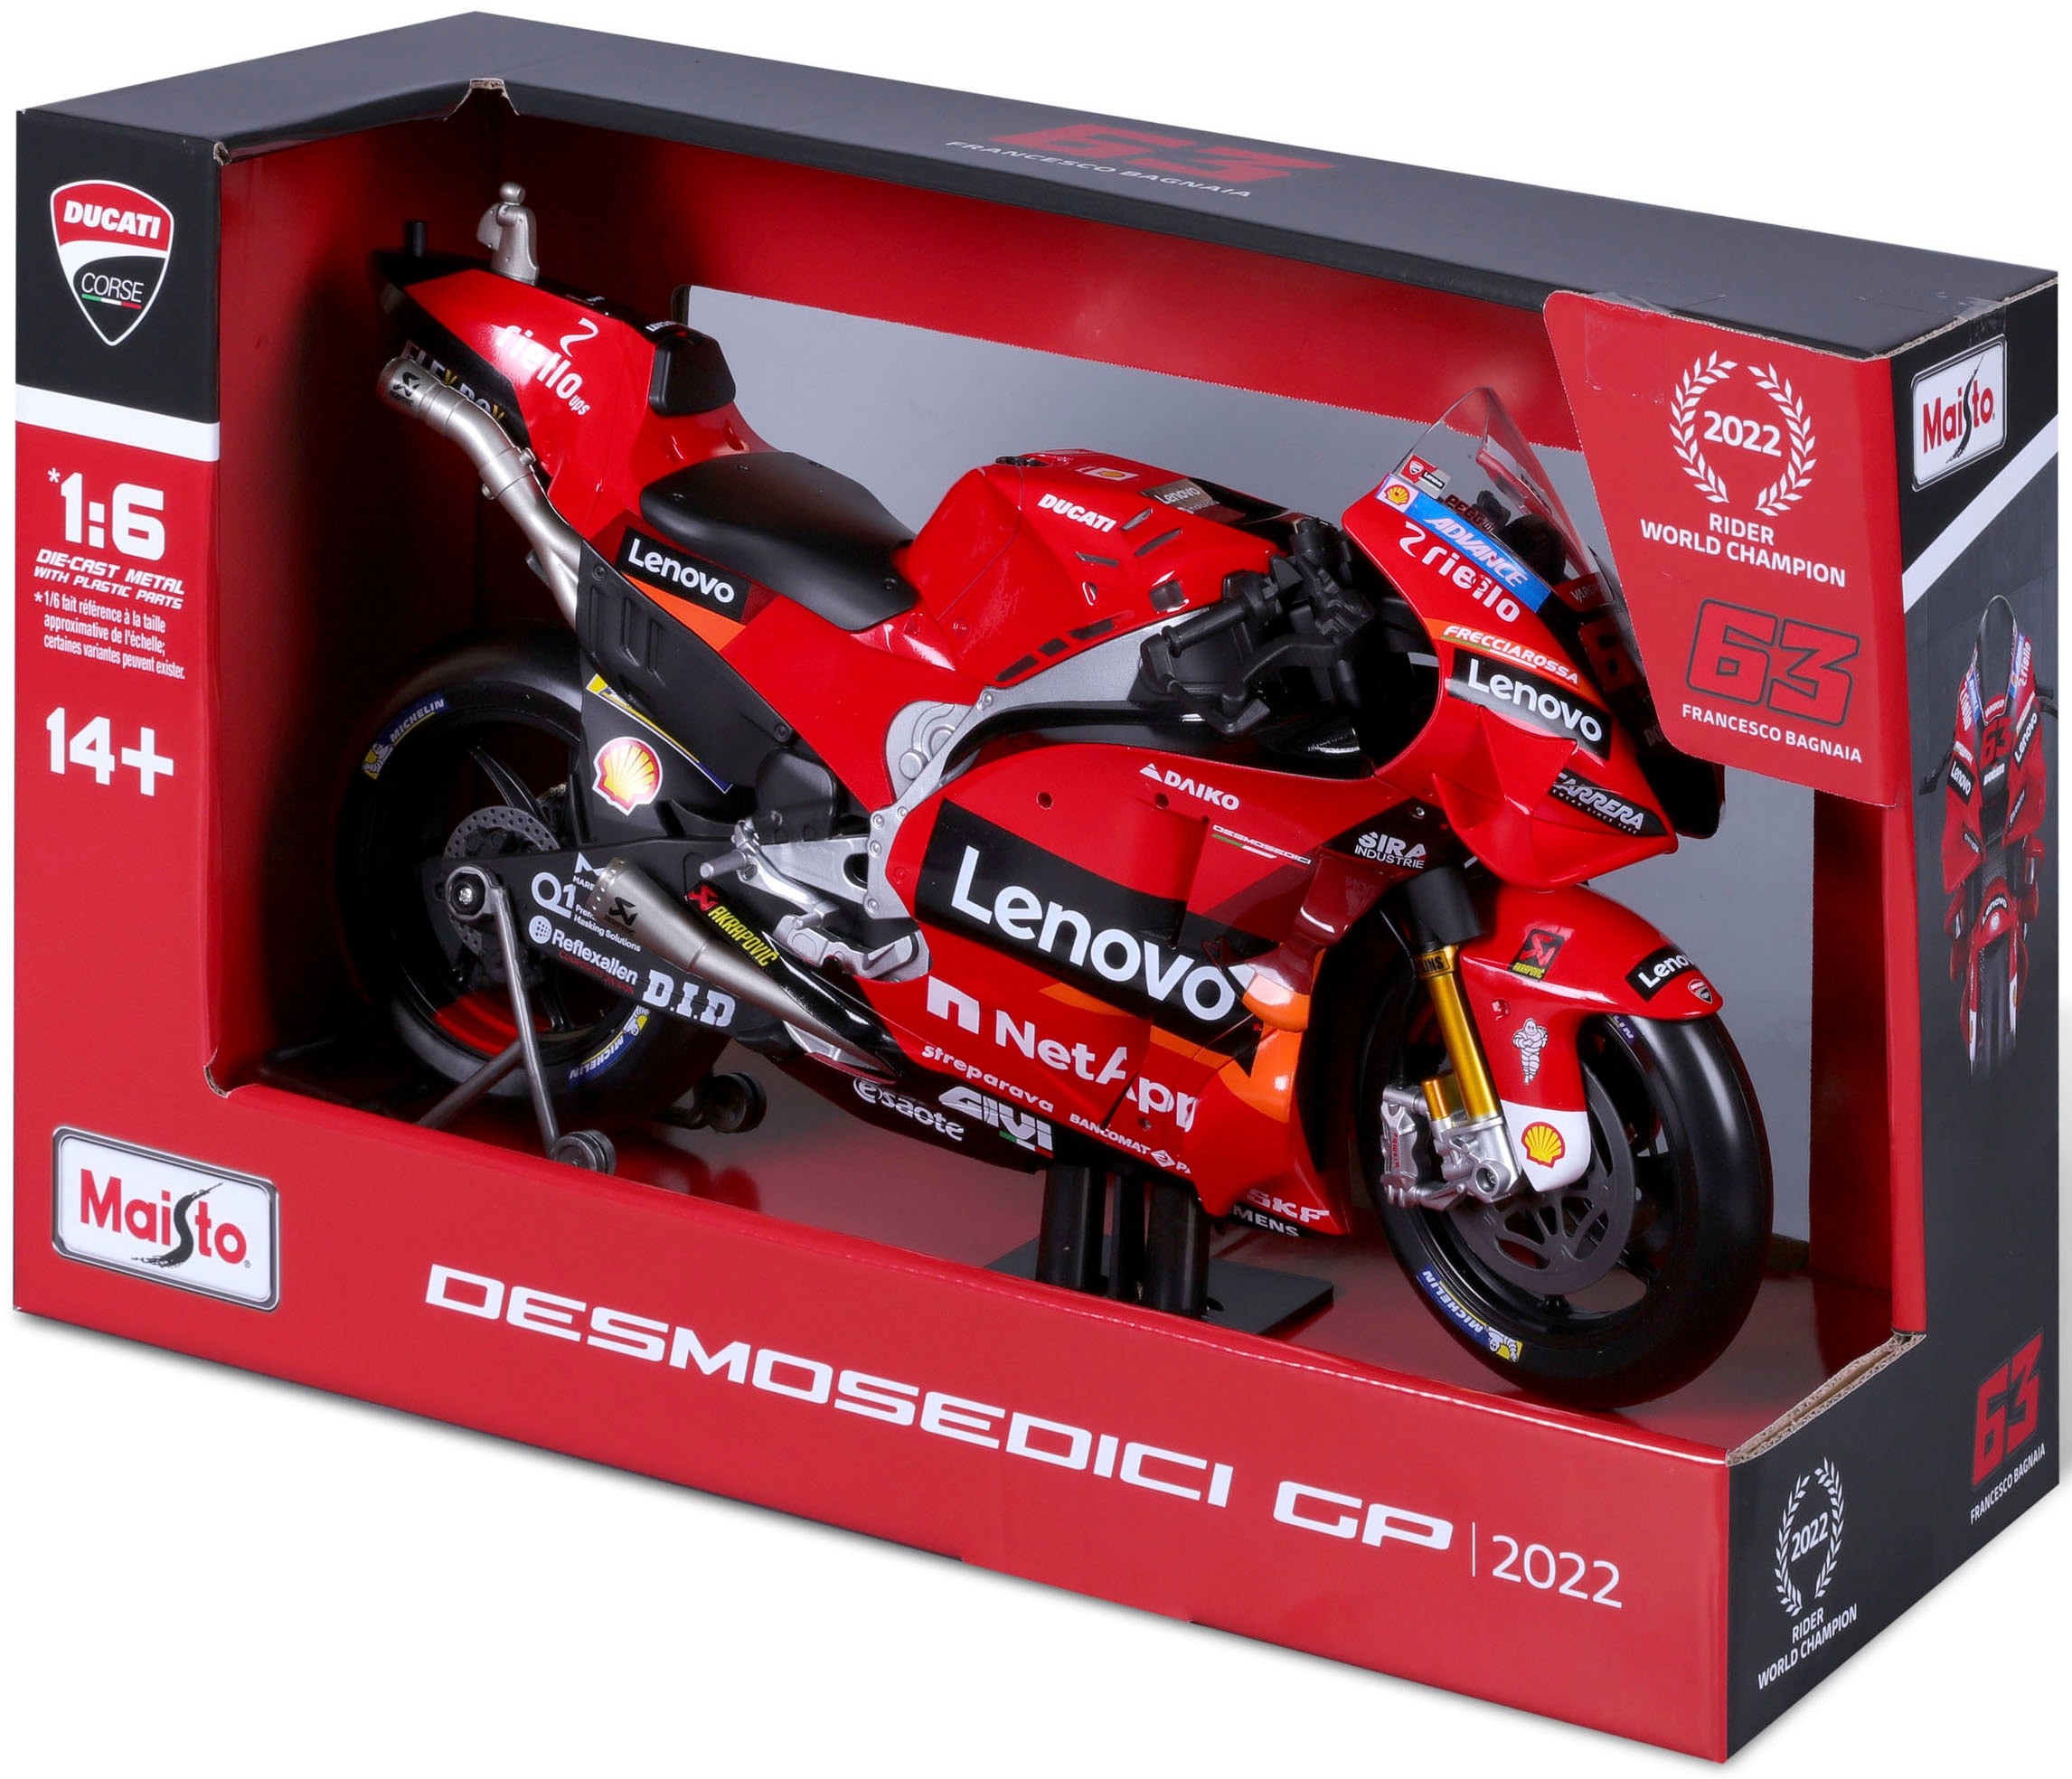 Maisto® Sammlerauto »Moto GP Ducati Lenovo ´22, #63 Francesco Bagnaia«, 1:6